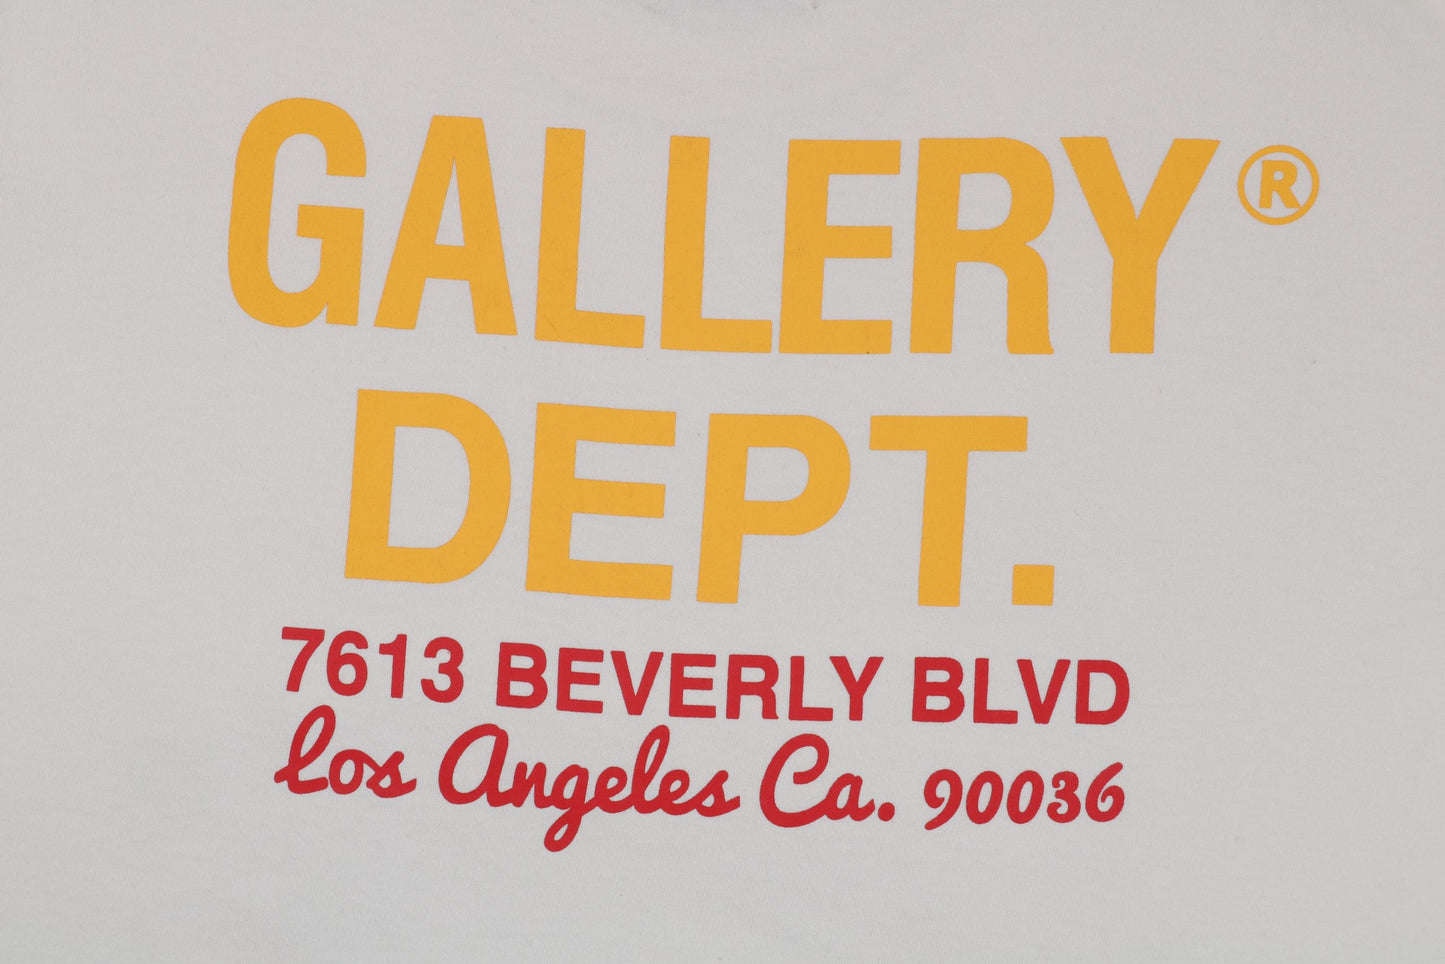 Gallery Dept Ebay T-Shirt